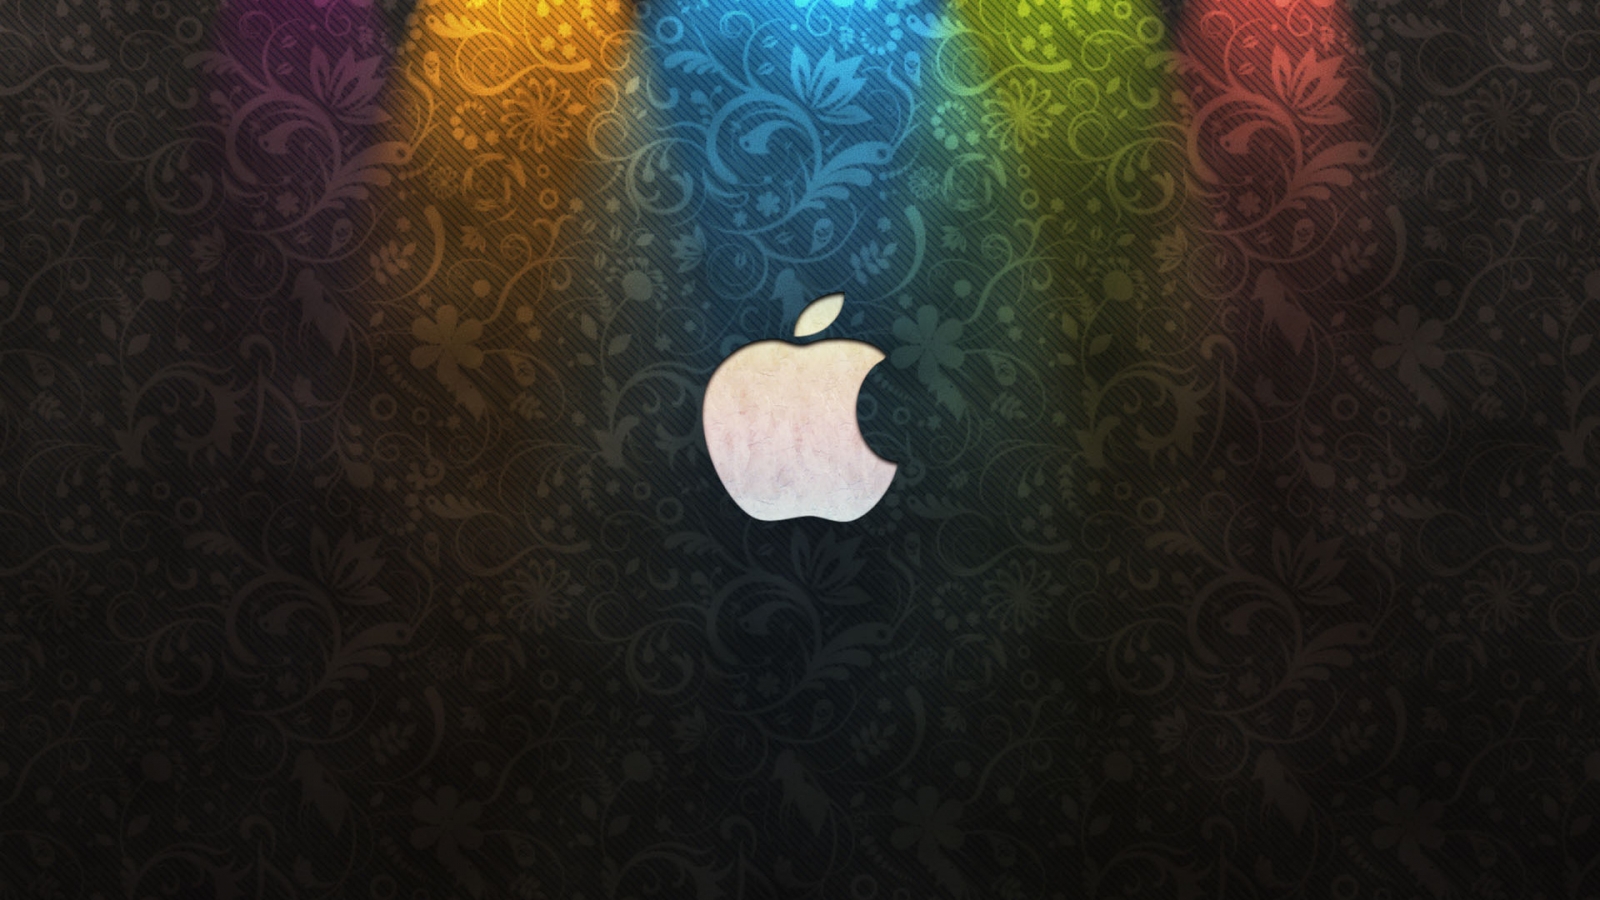 Apple Logo and Flower Background for 1600 x 900 HDTV resolution